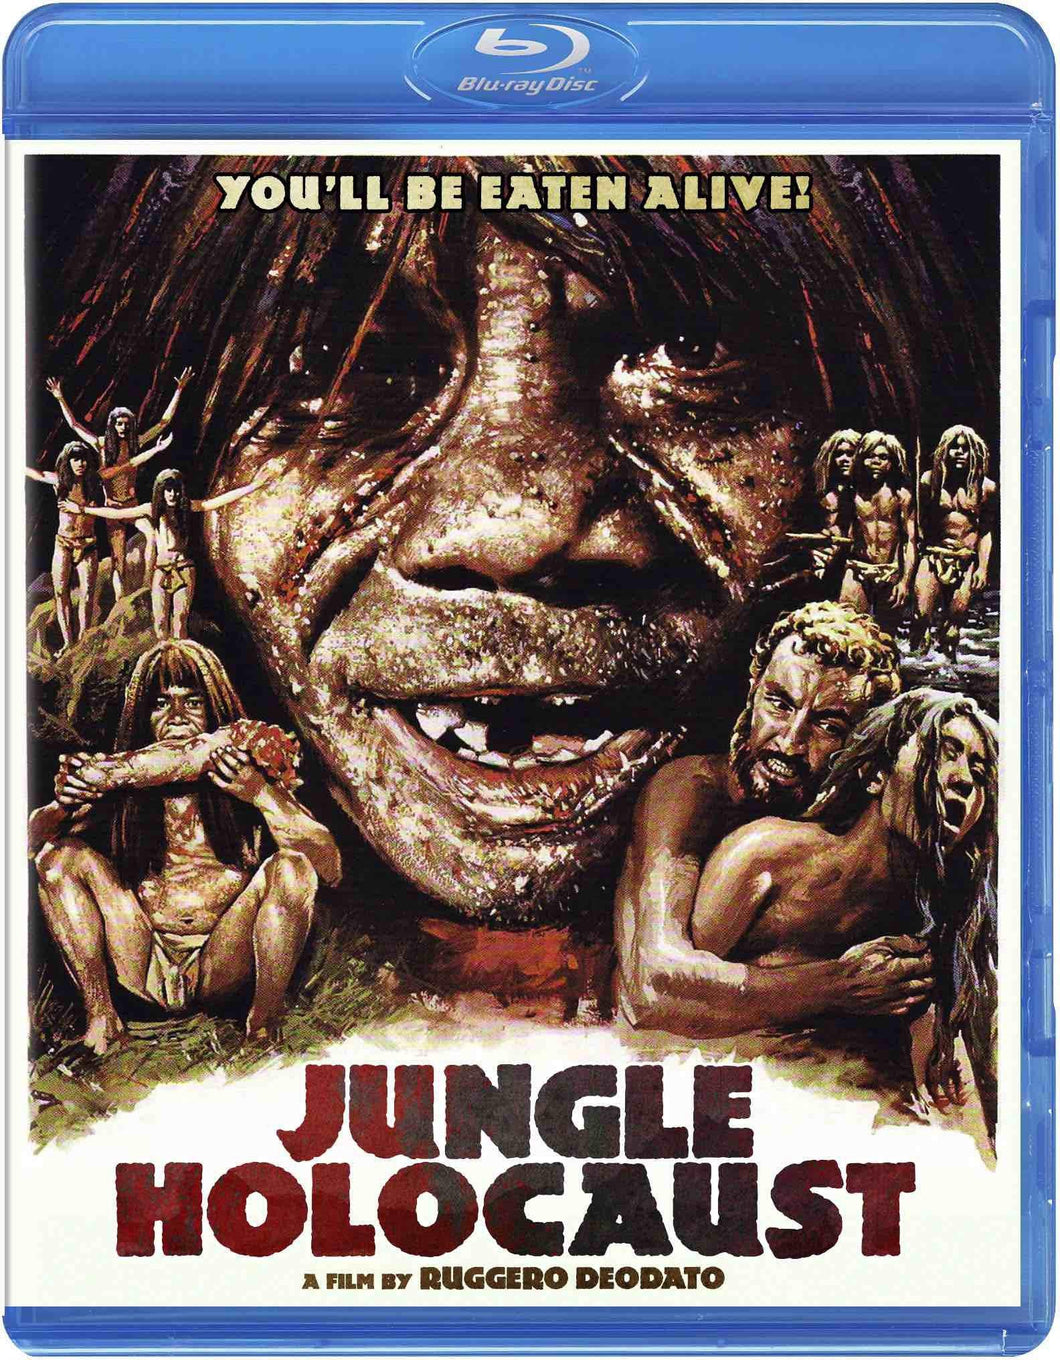 Jungle Holocaust (Blu-ray): Ronin Flix